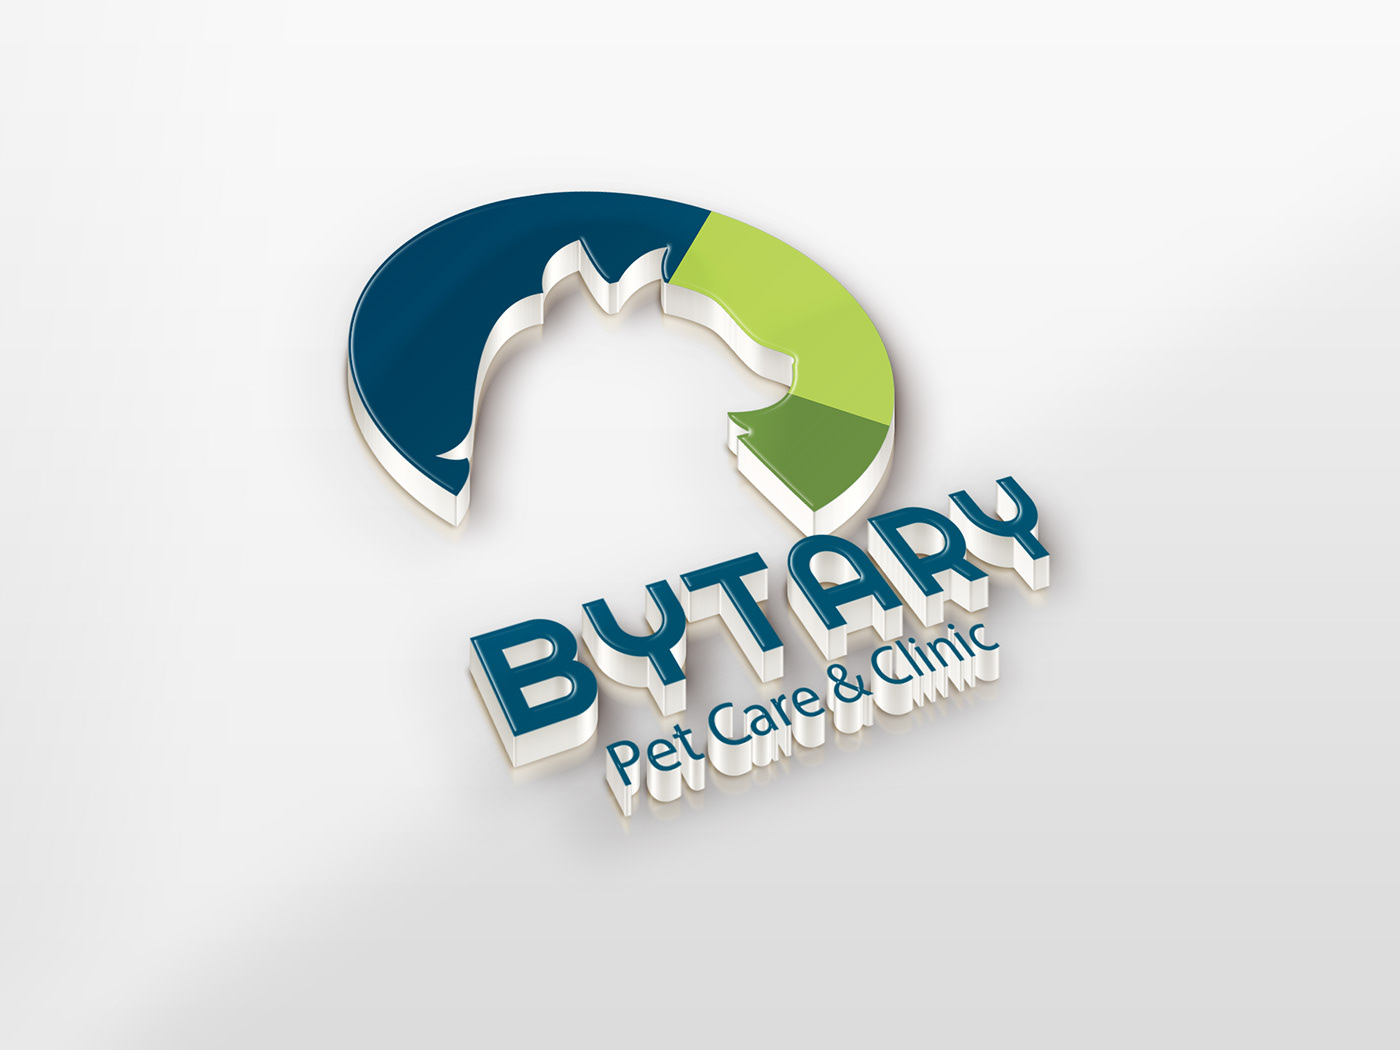 logo Bytary branding  Pet Clinics